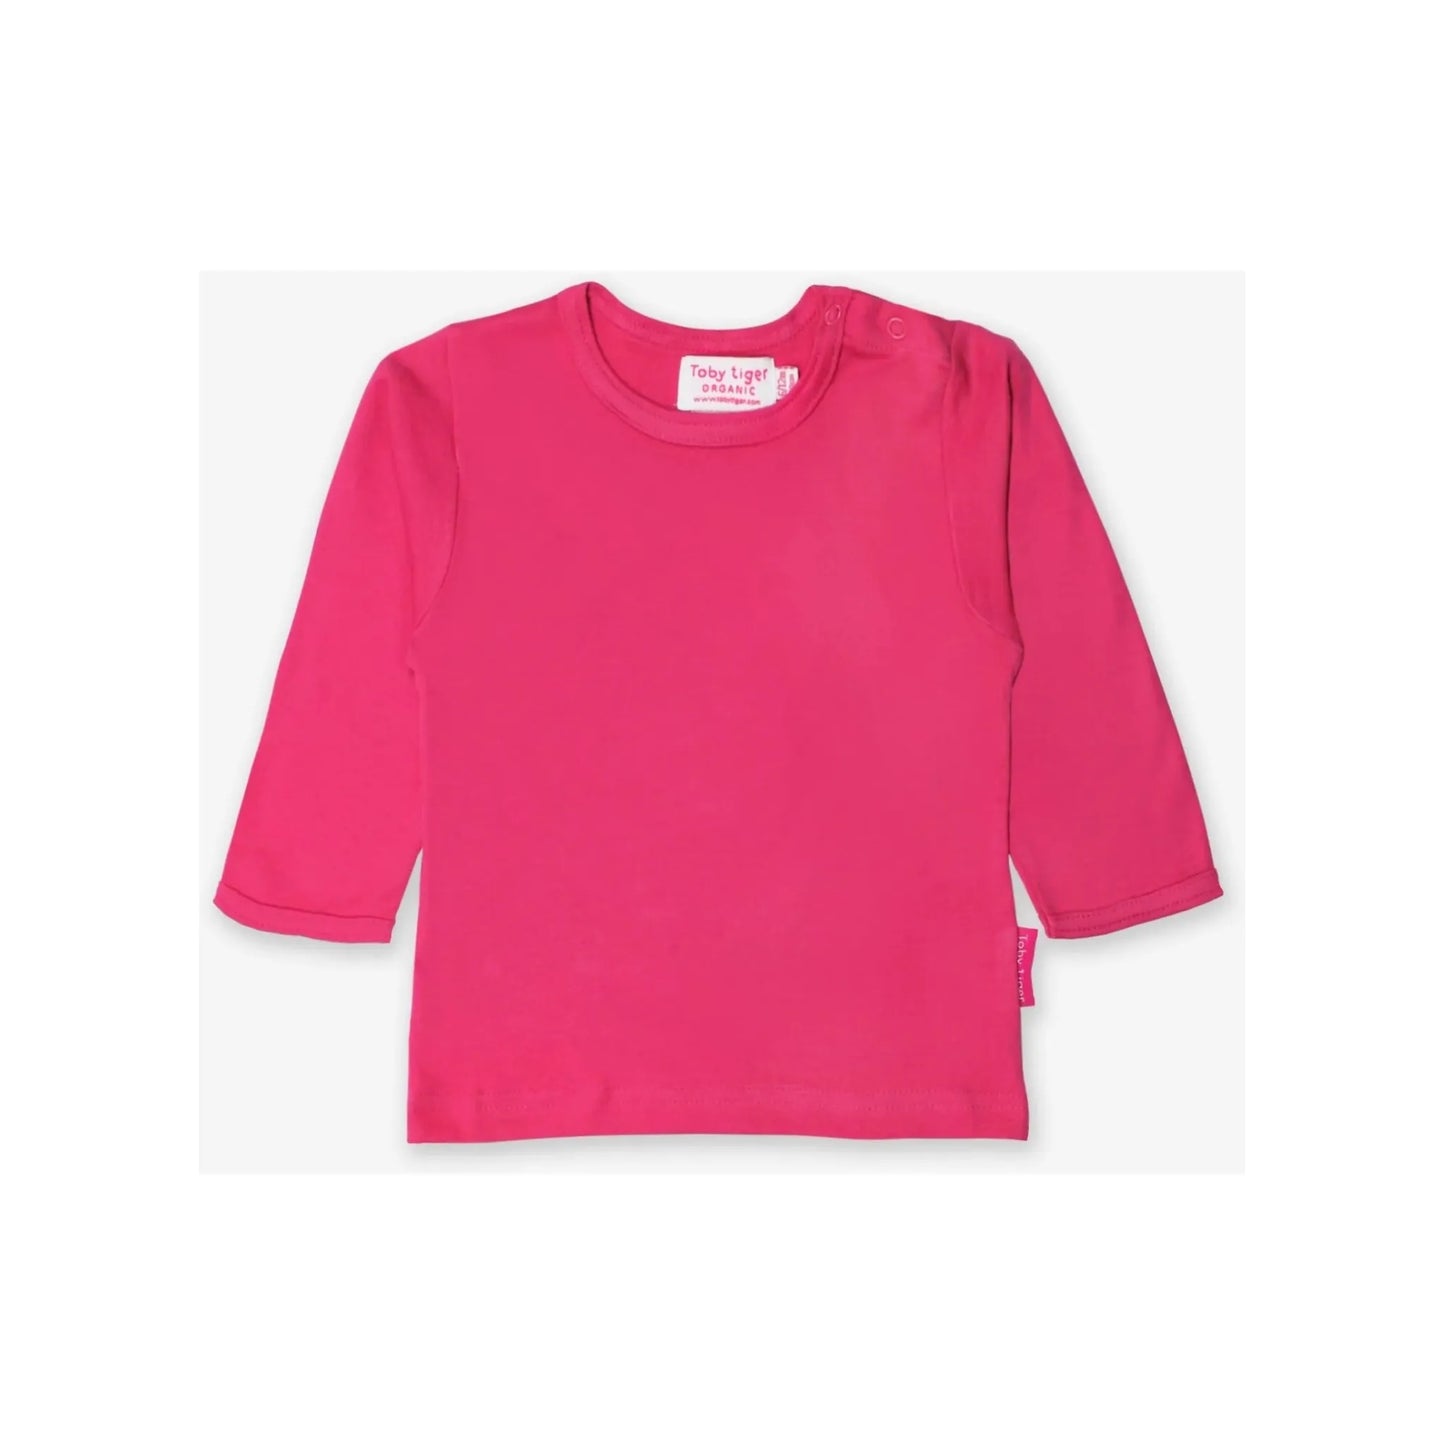 Toby Tiger Basic Long Sleeve Pink T-Shirt